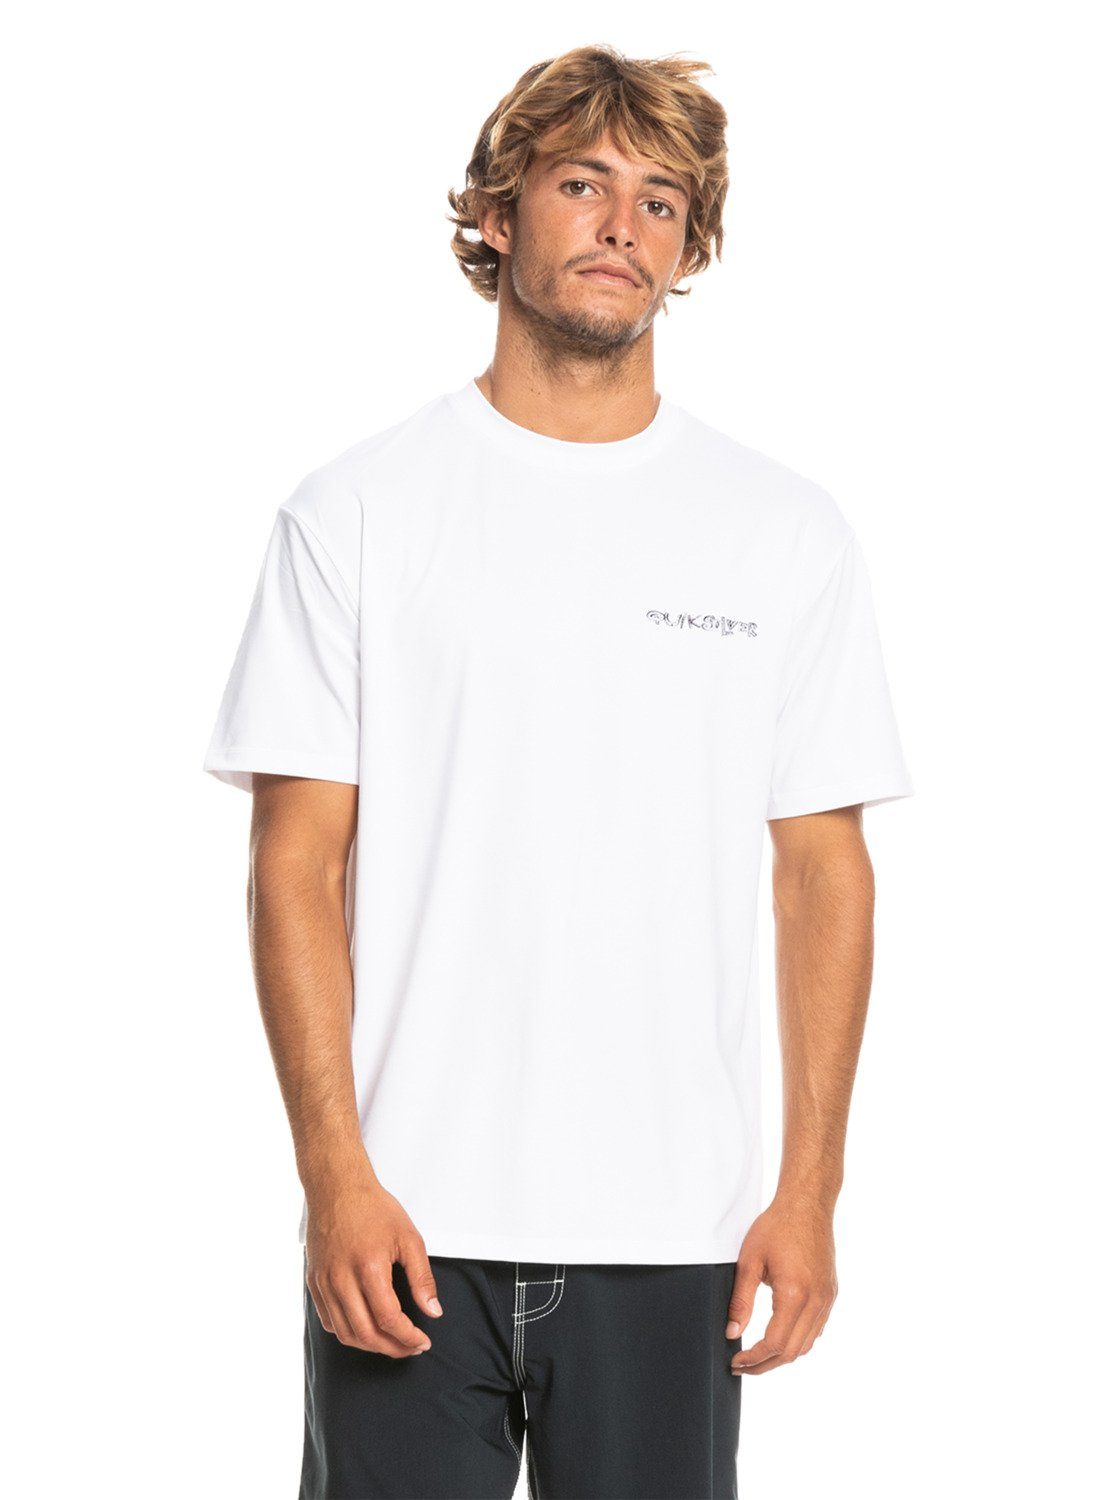 Neopren Surf White Mix Quiksilver Shirt